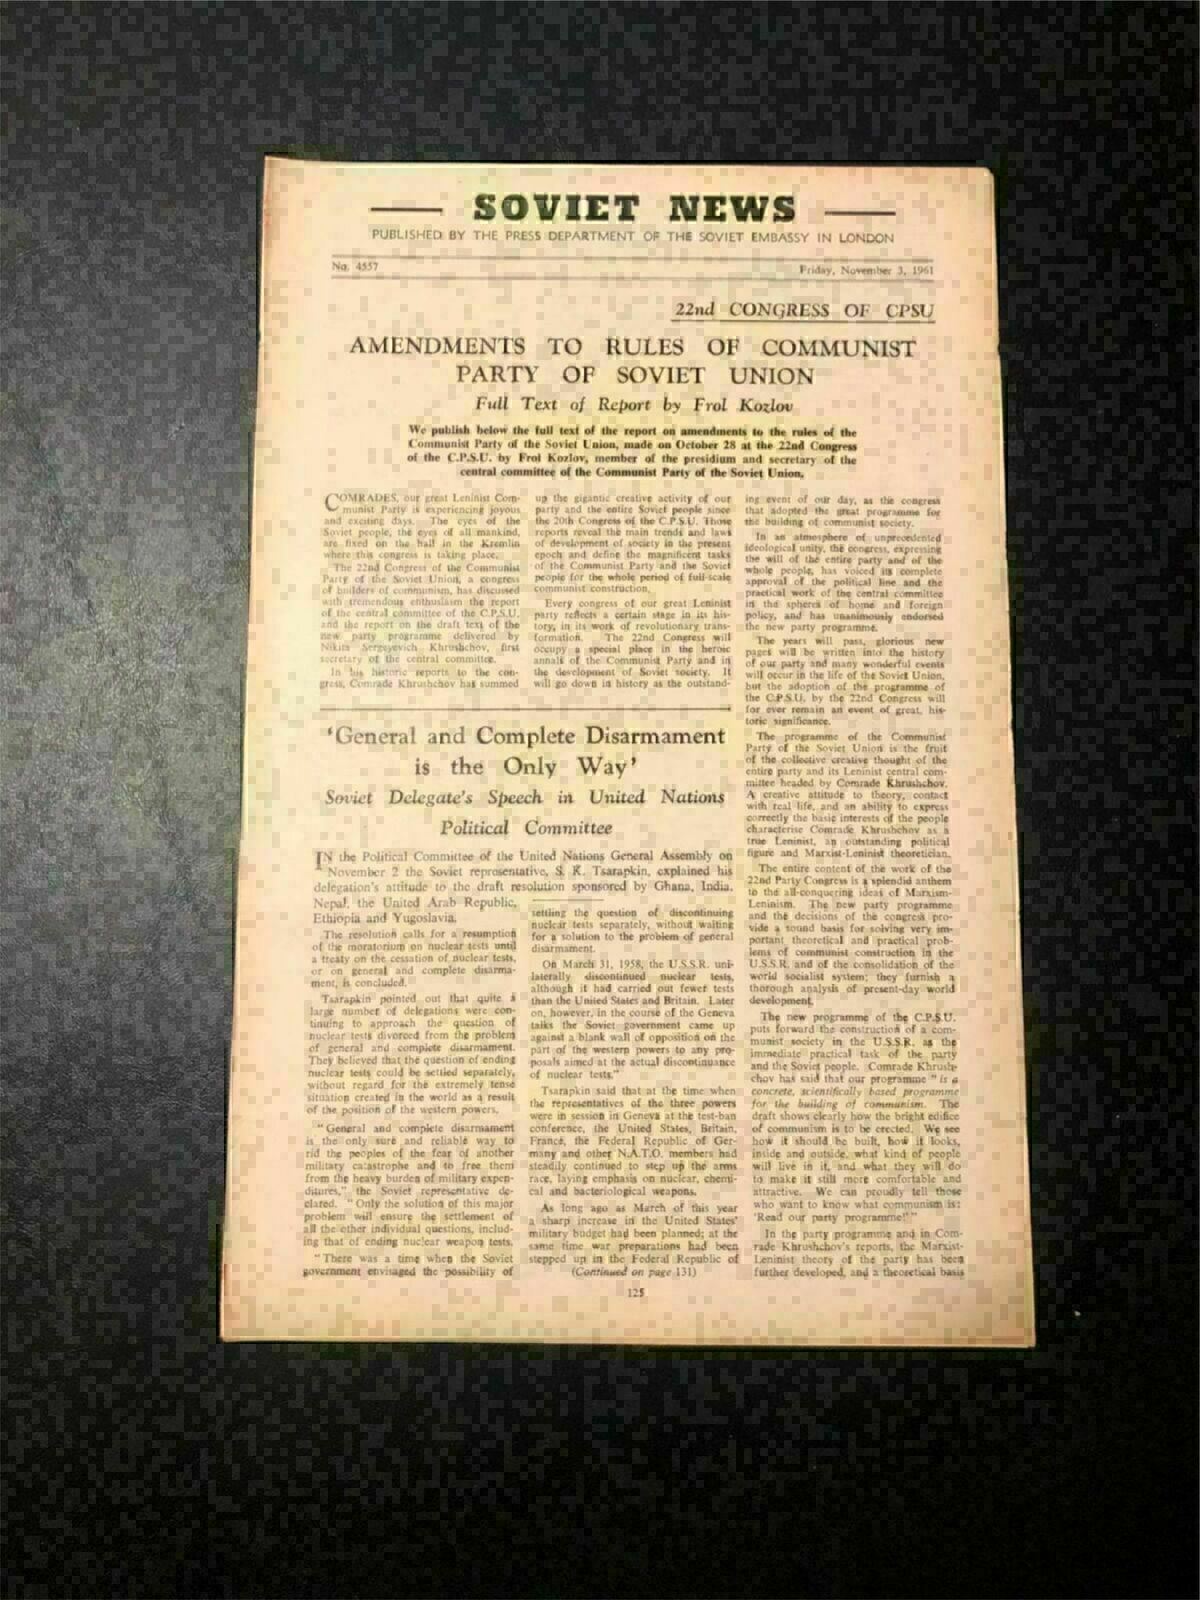 KL) USSR Soviet Weekly Newspaper AMENDMENTS TO RULES OF COMMUNIST Nov 3 1961